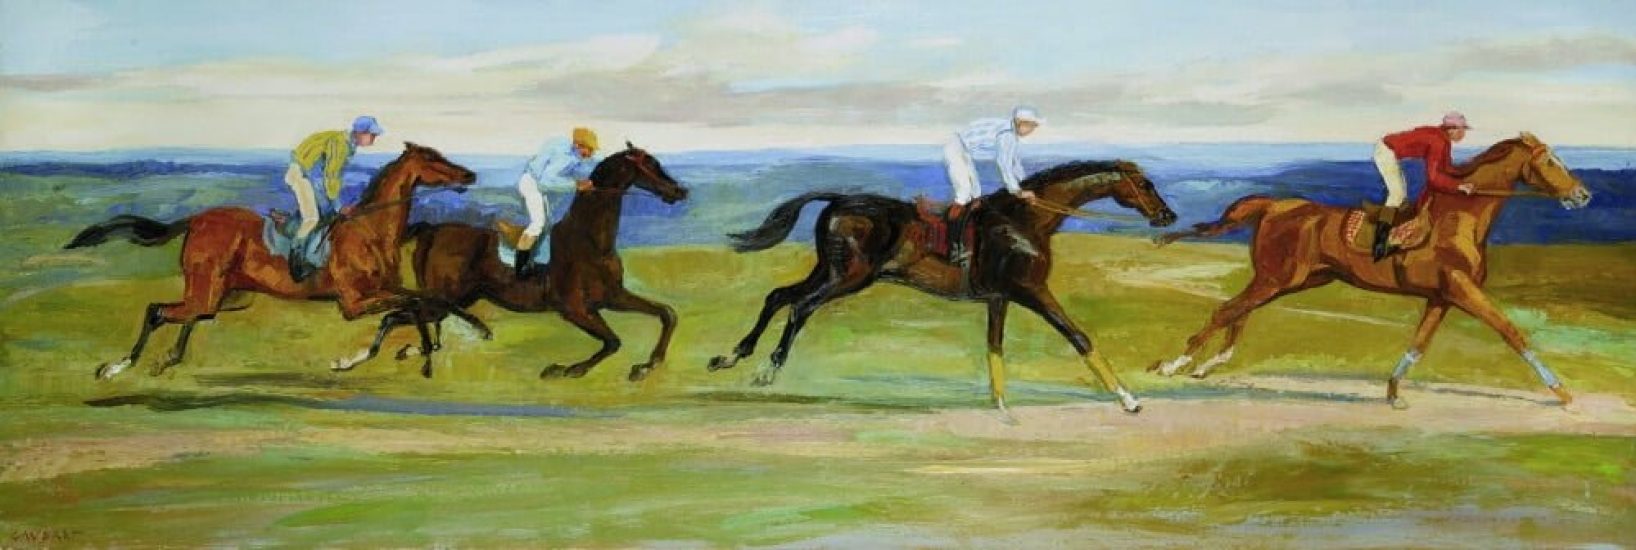 The gallop 1 - 50 x 150 cm - private collection